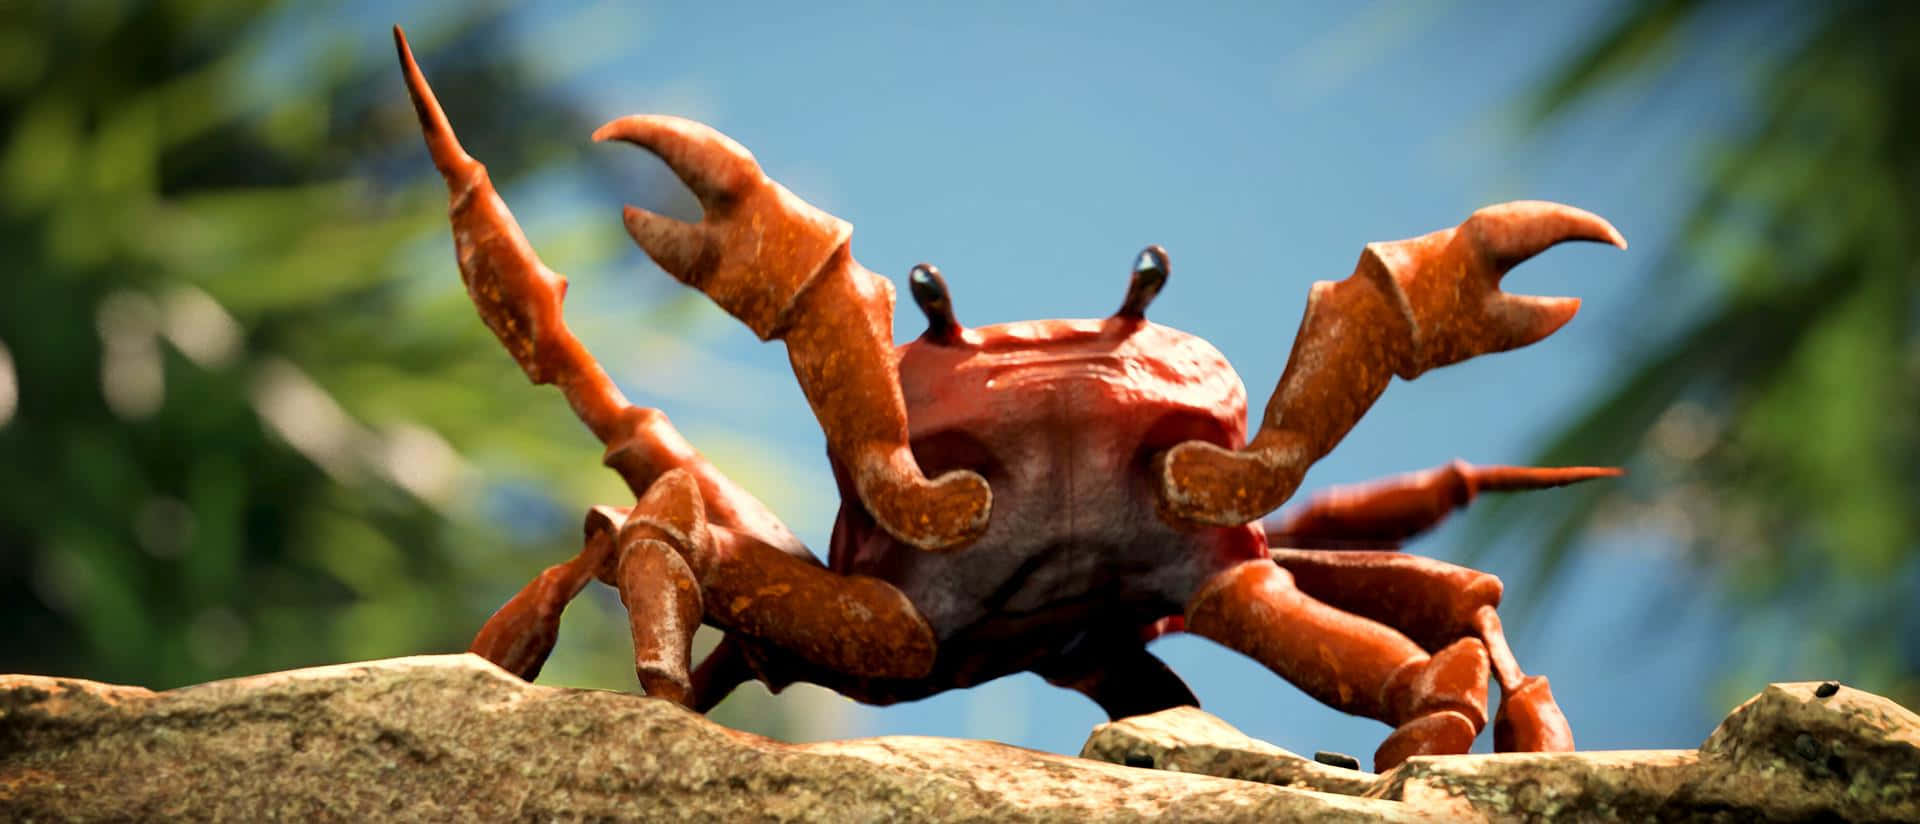 Crab Background Wallpaper